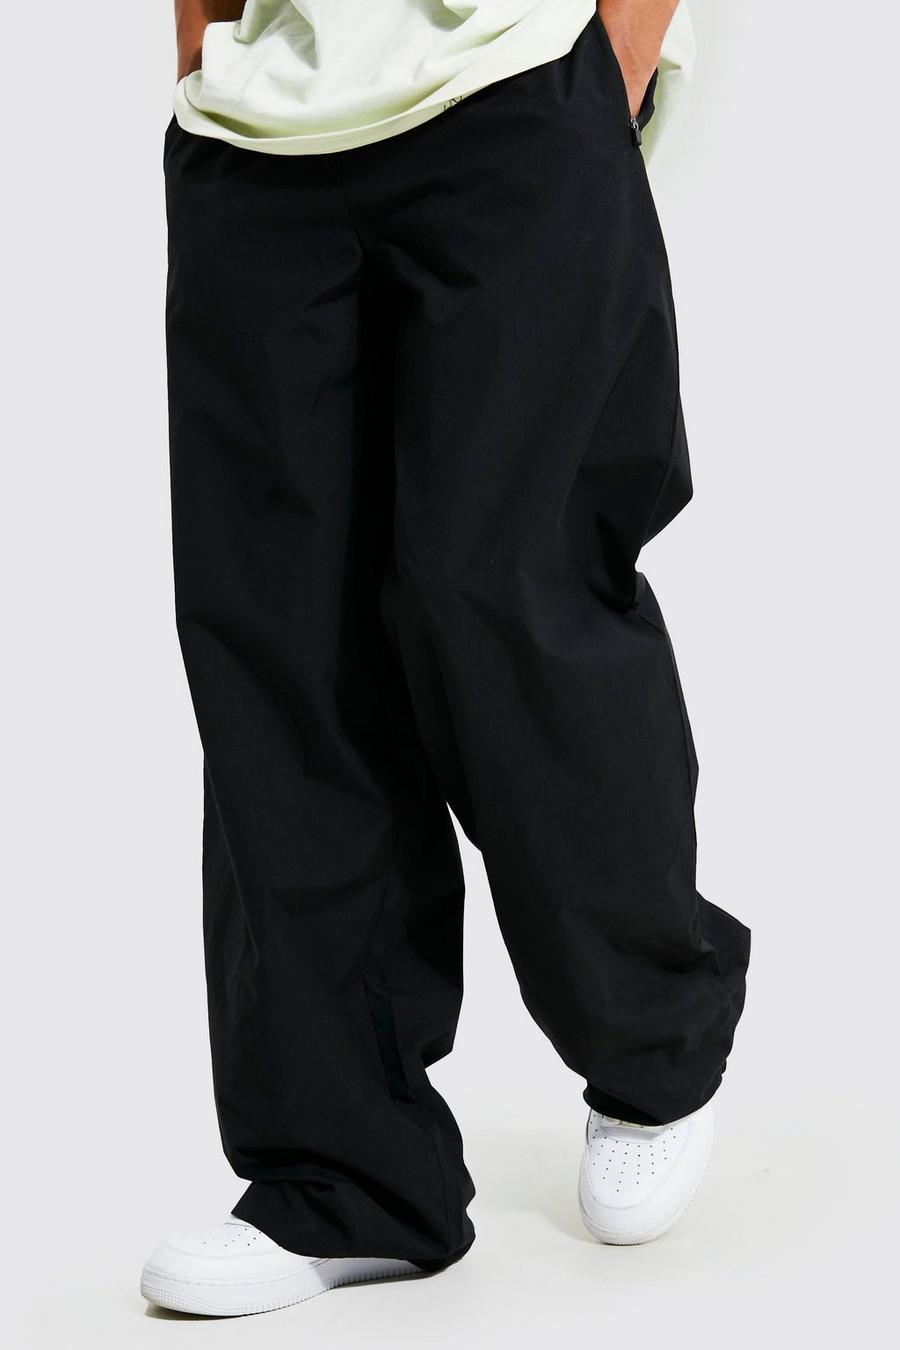 Pantalón Tall súper ancho, Black negro image number 1